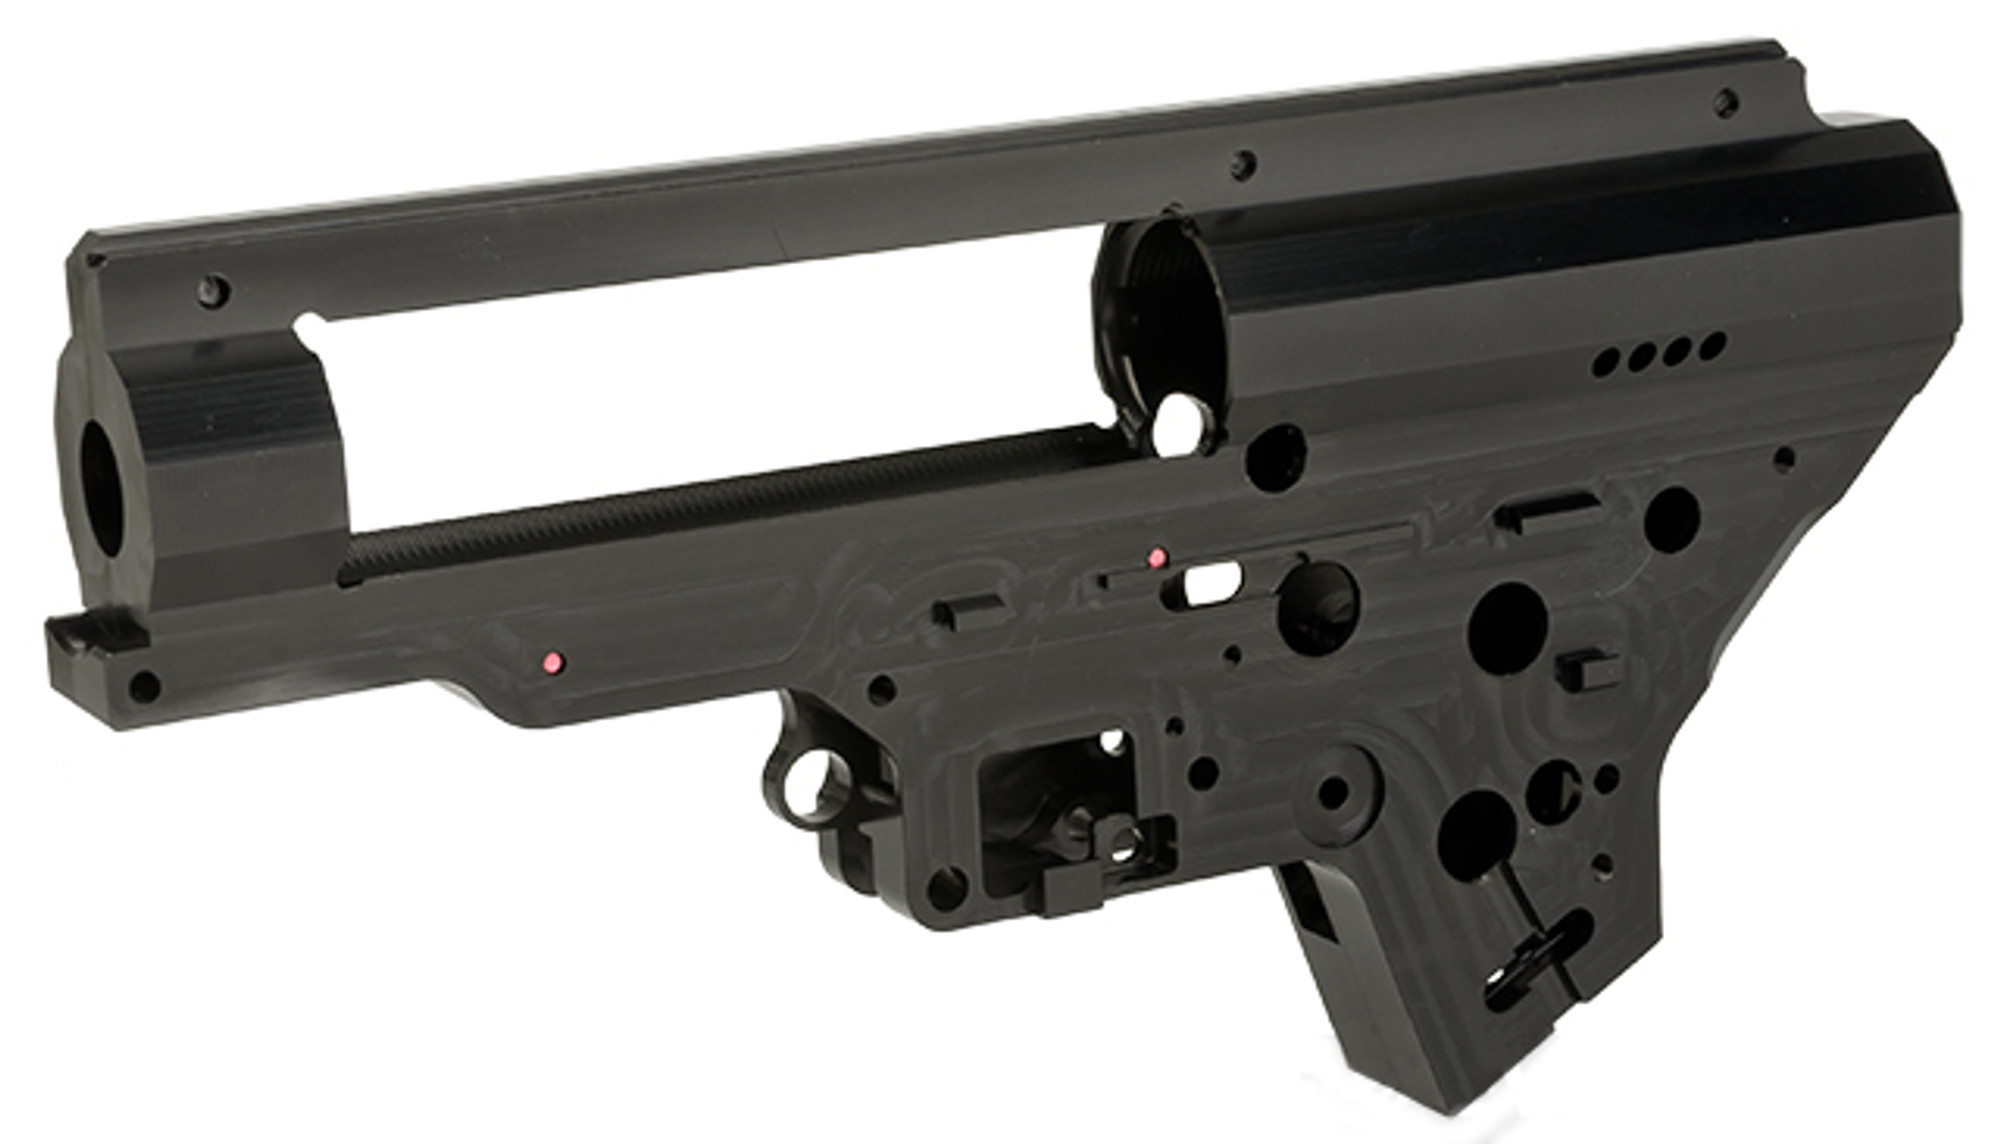 Retro Arms CZ Billet CNC 9mm QSC Gearbox Shell for SR25 Series Airsoft AEG Rifles - Black